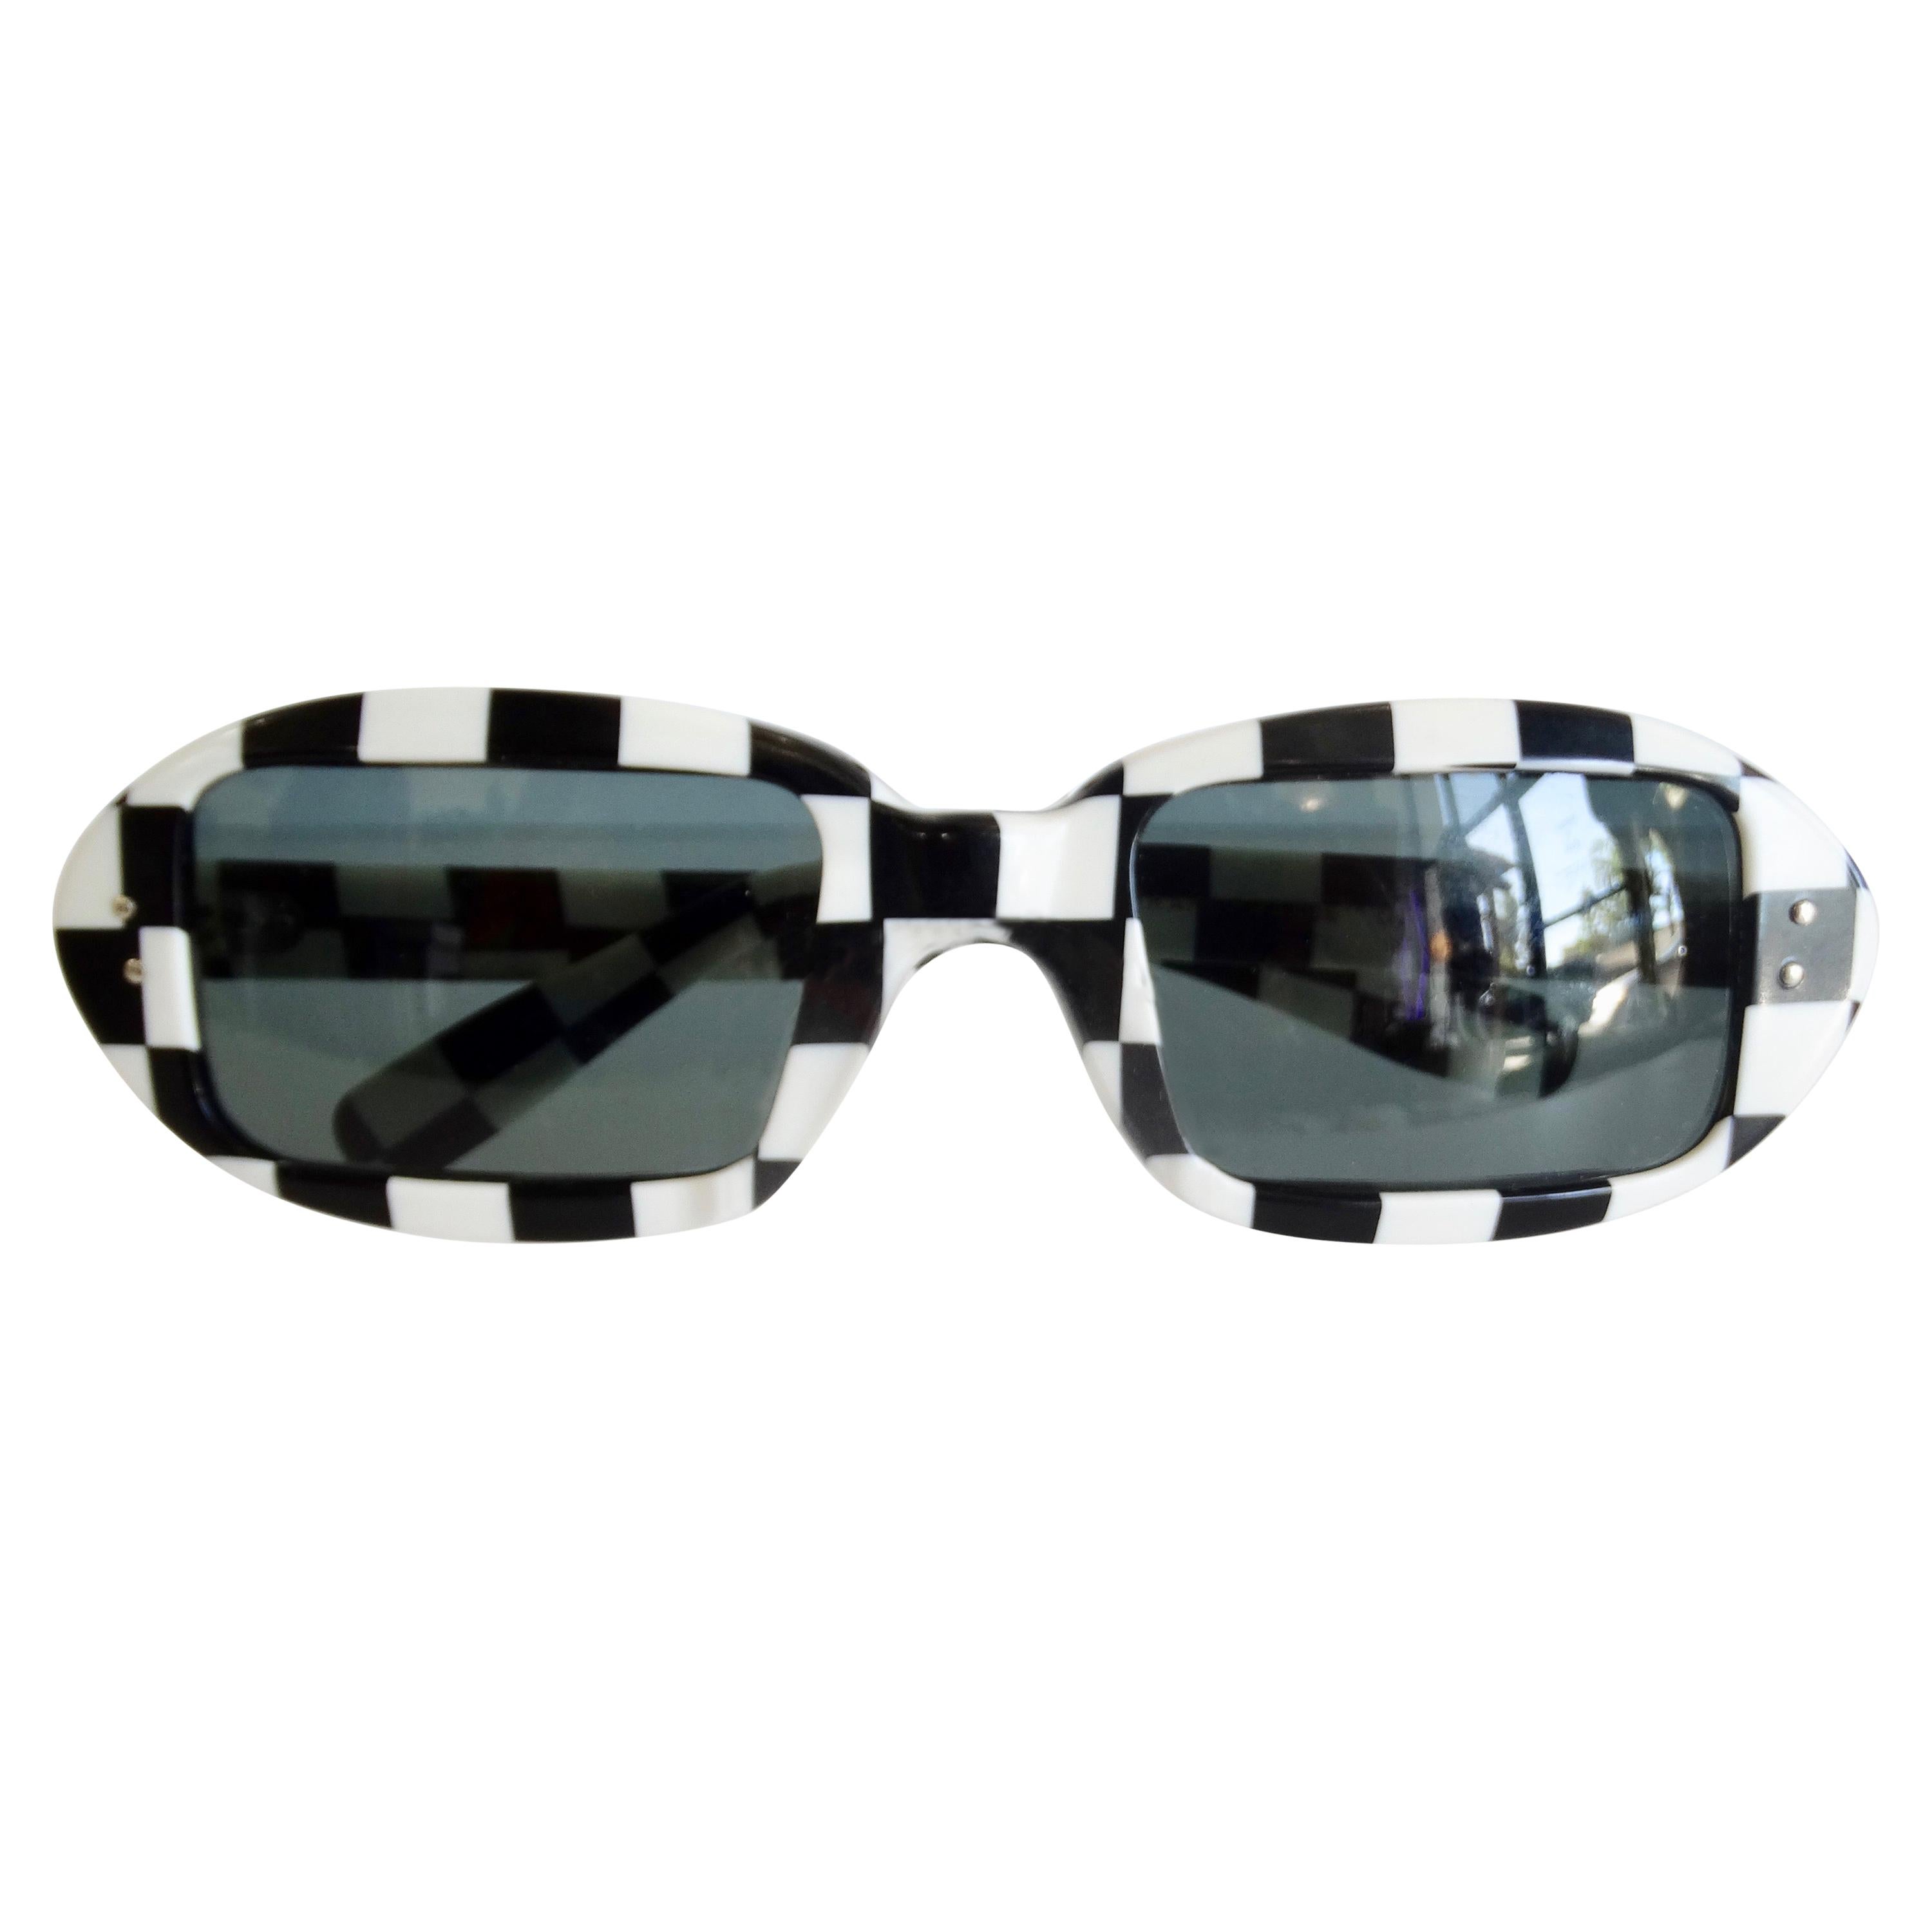 Black and White Check Mod 1960s Sunglasses